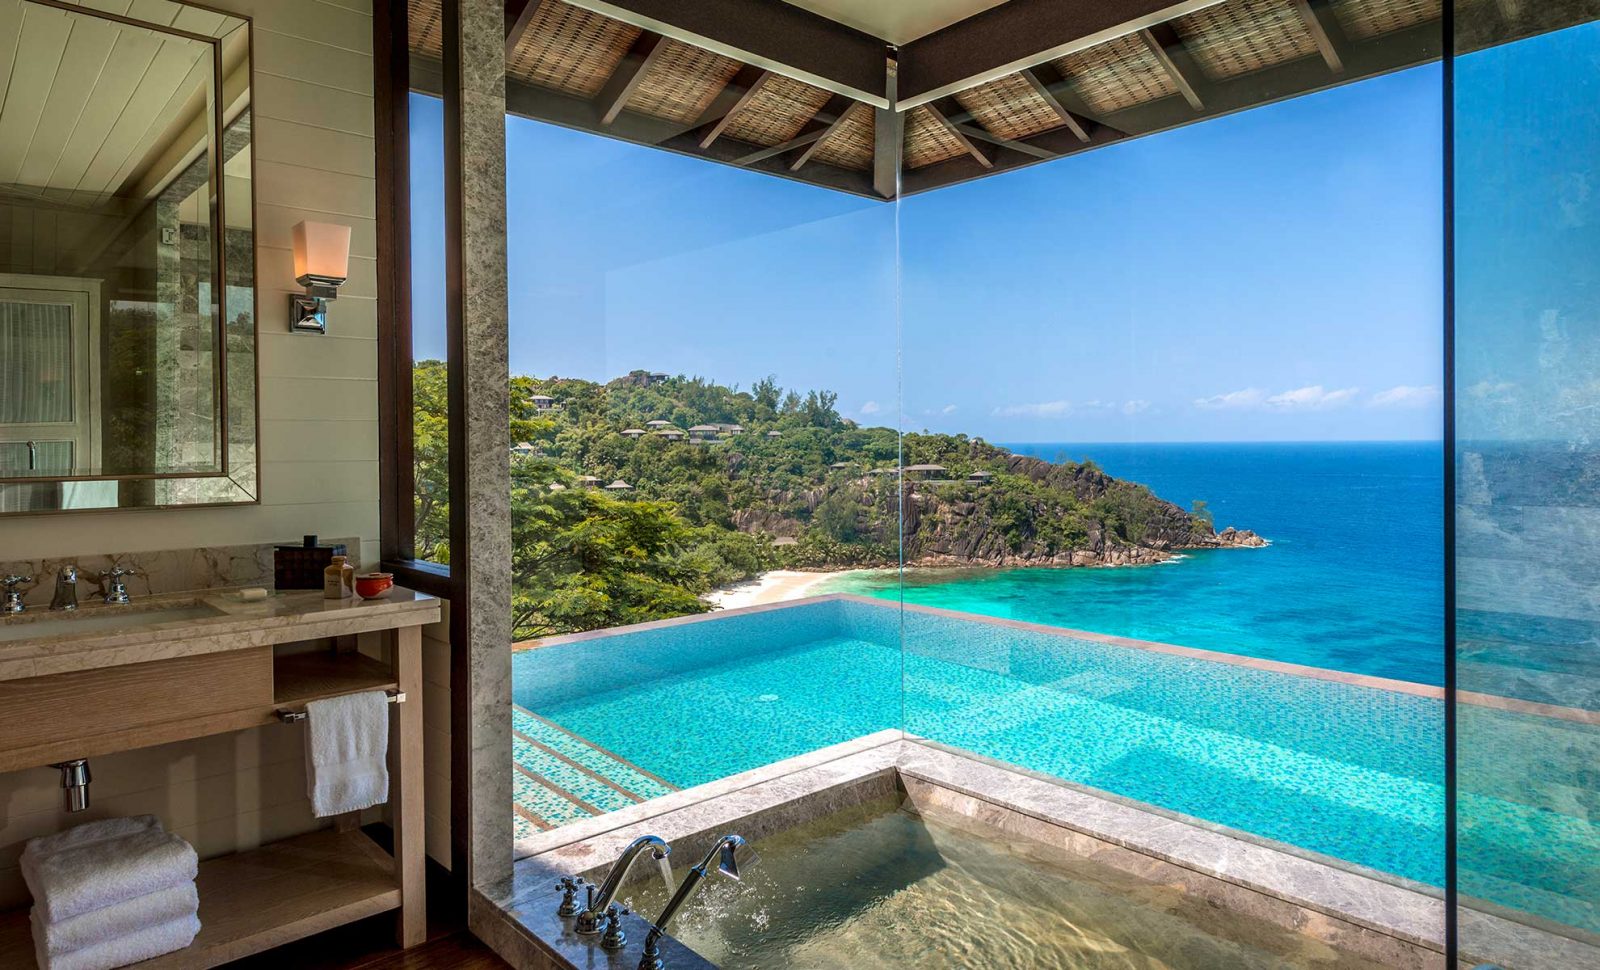 Four Seasons Resort Seychelles14 1600x970 